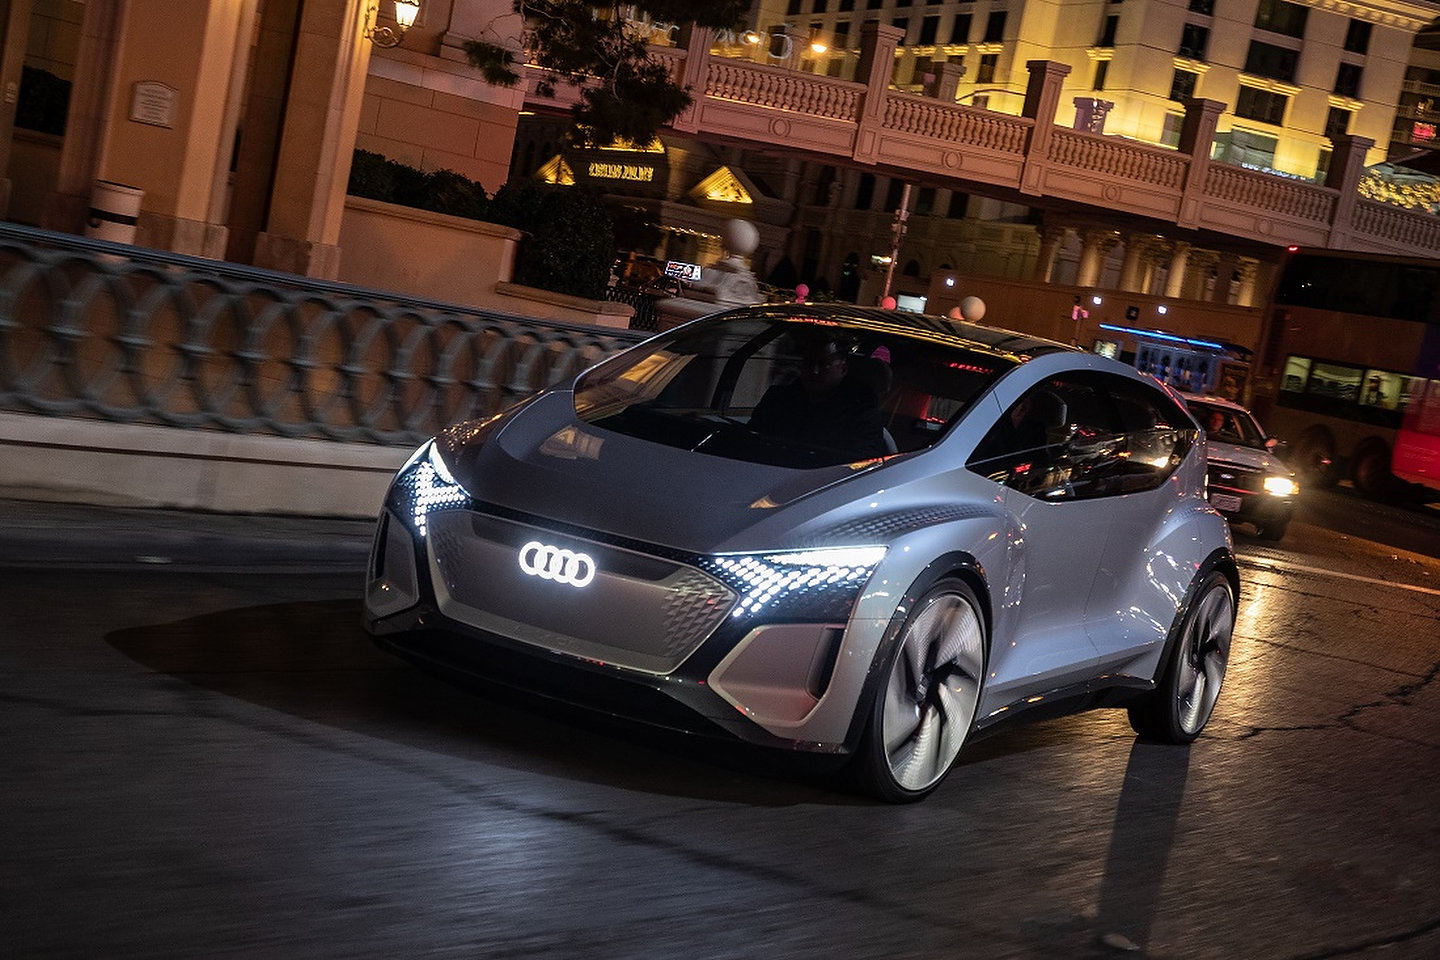 The Audi AI:ME at CES 2020